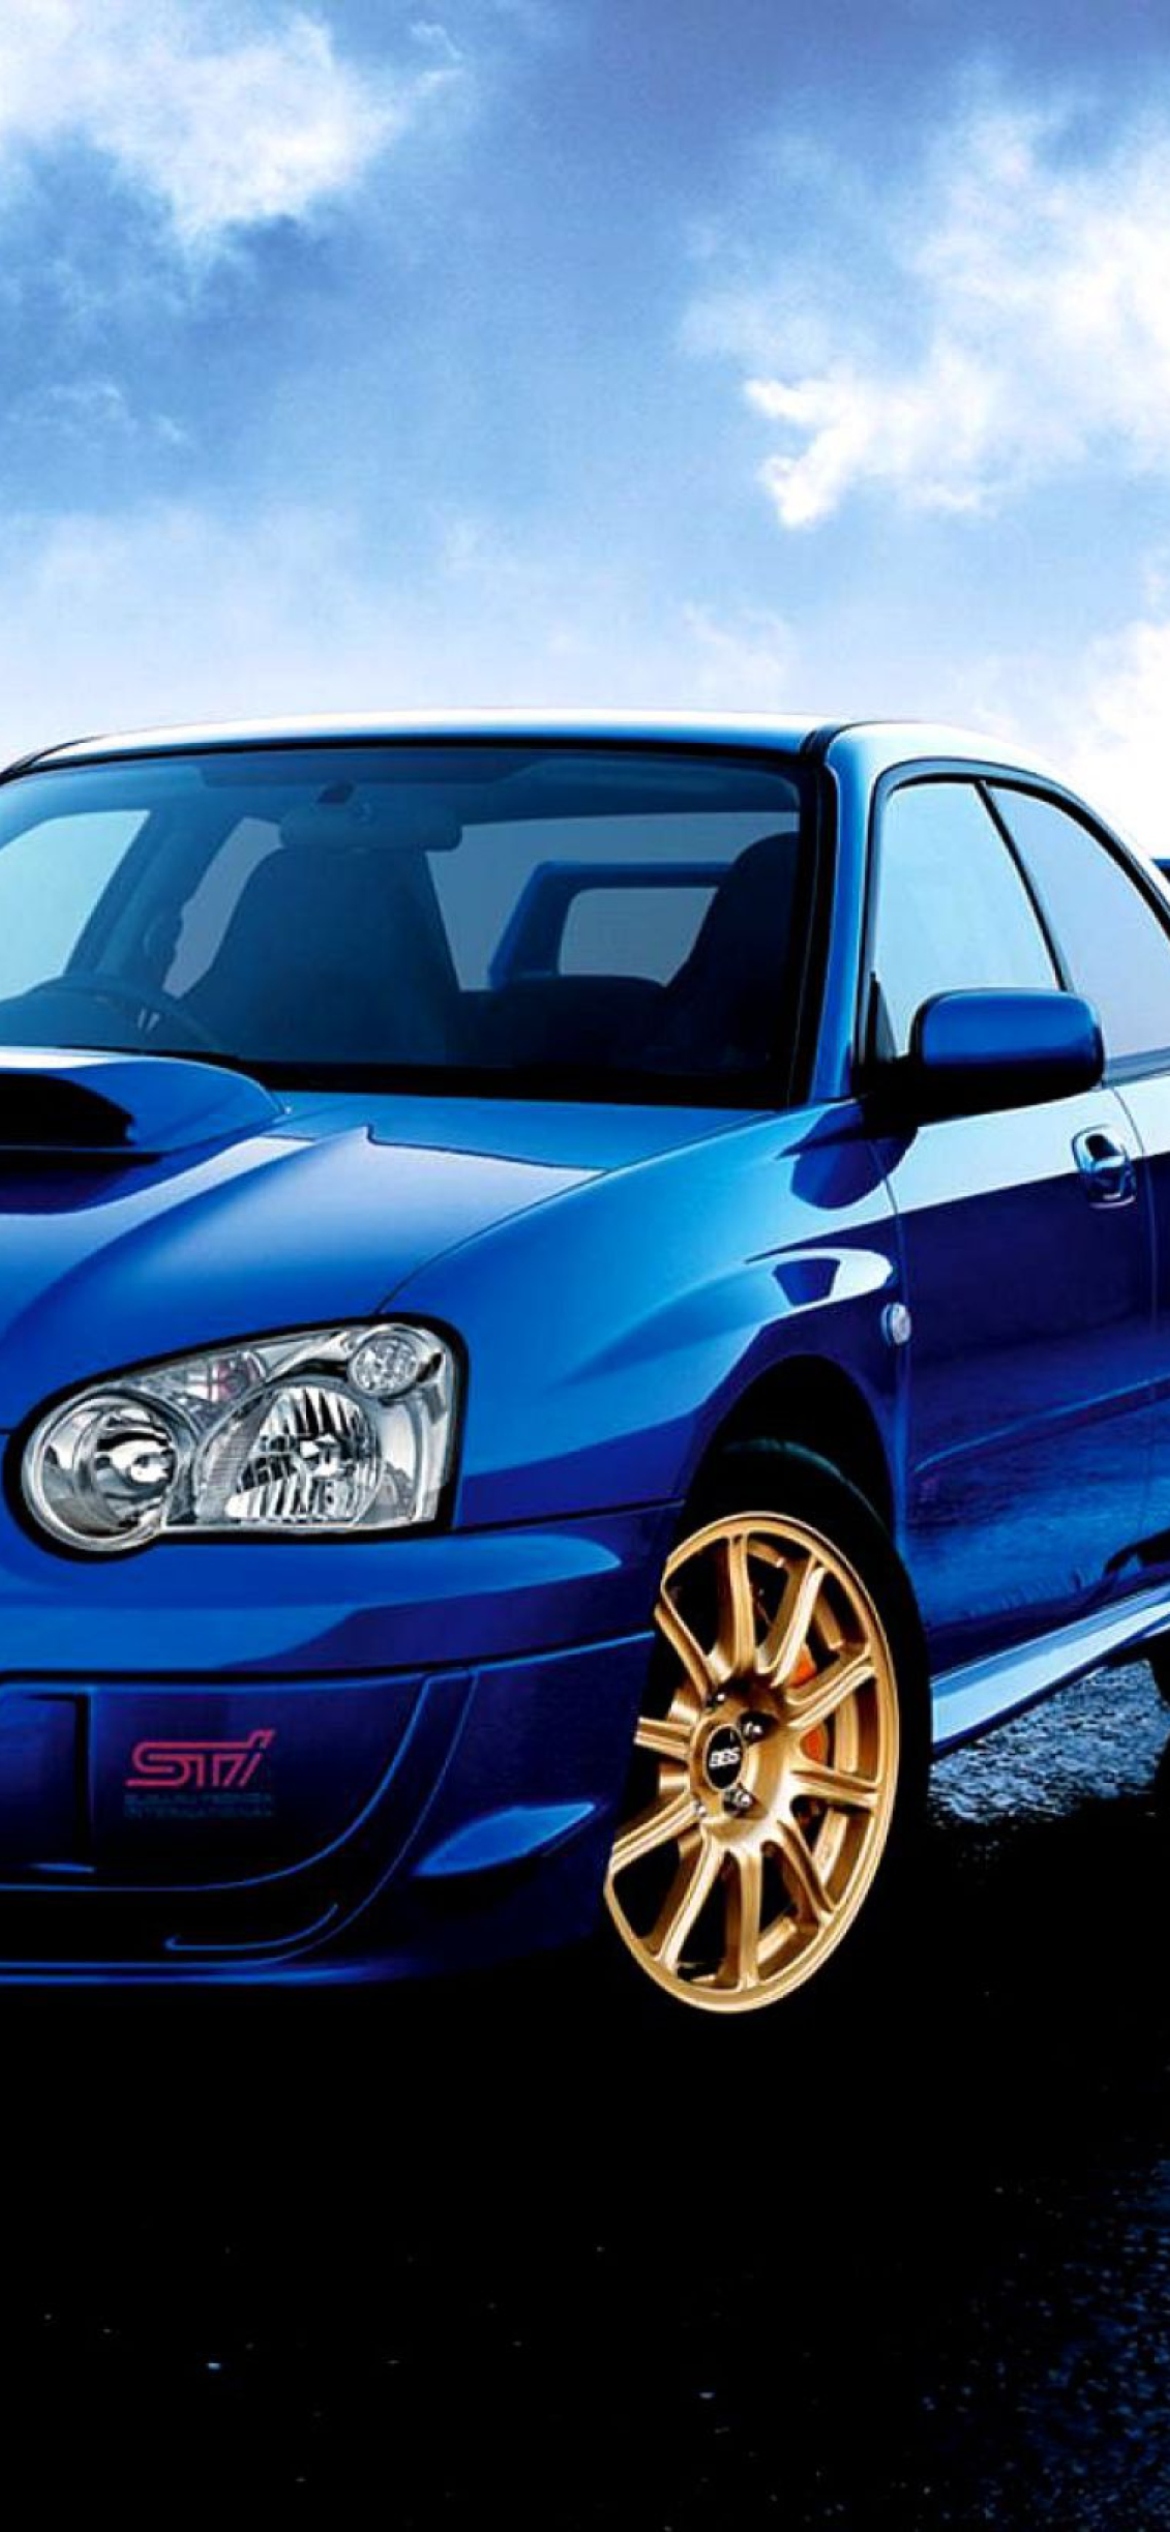 Subaru Impreza Wrx Sti wallpaper 1170x2532